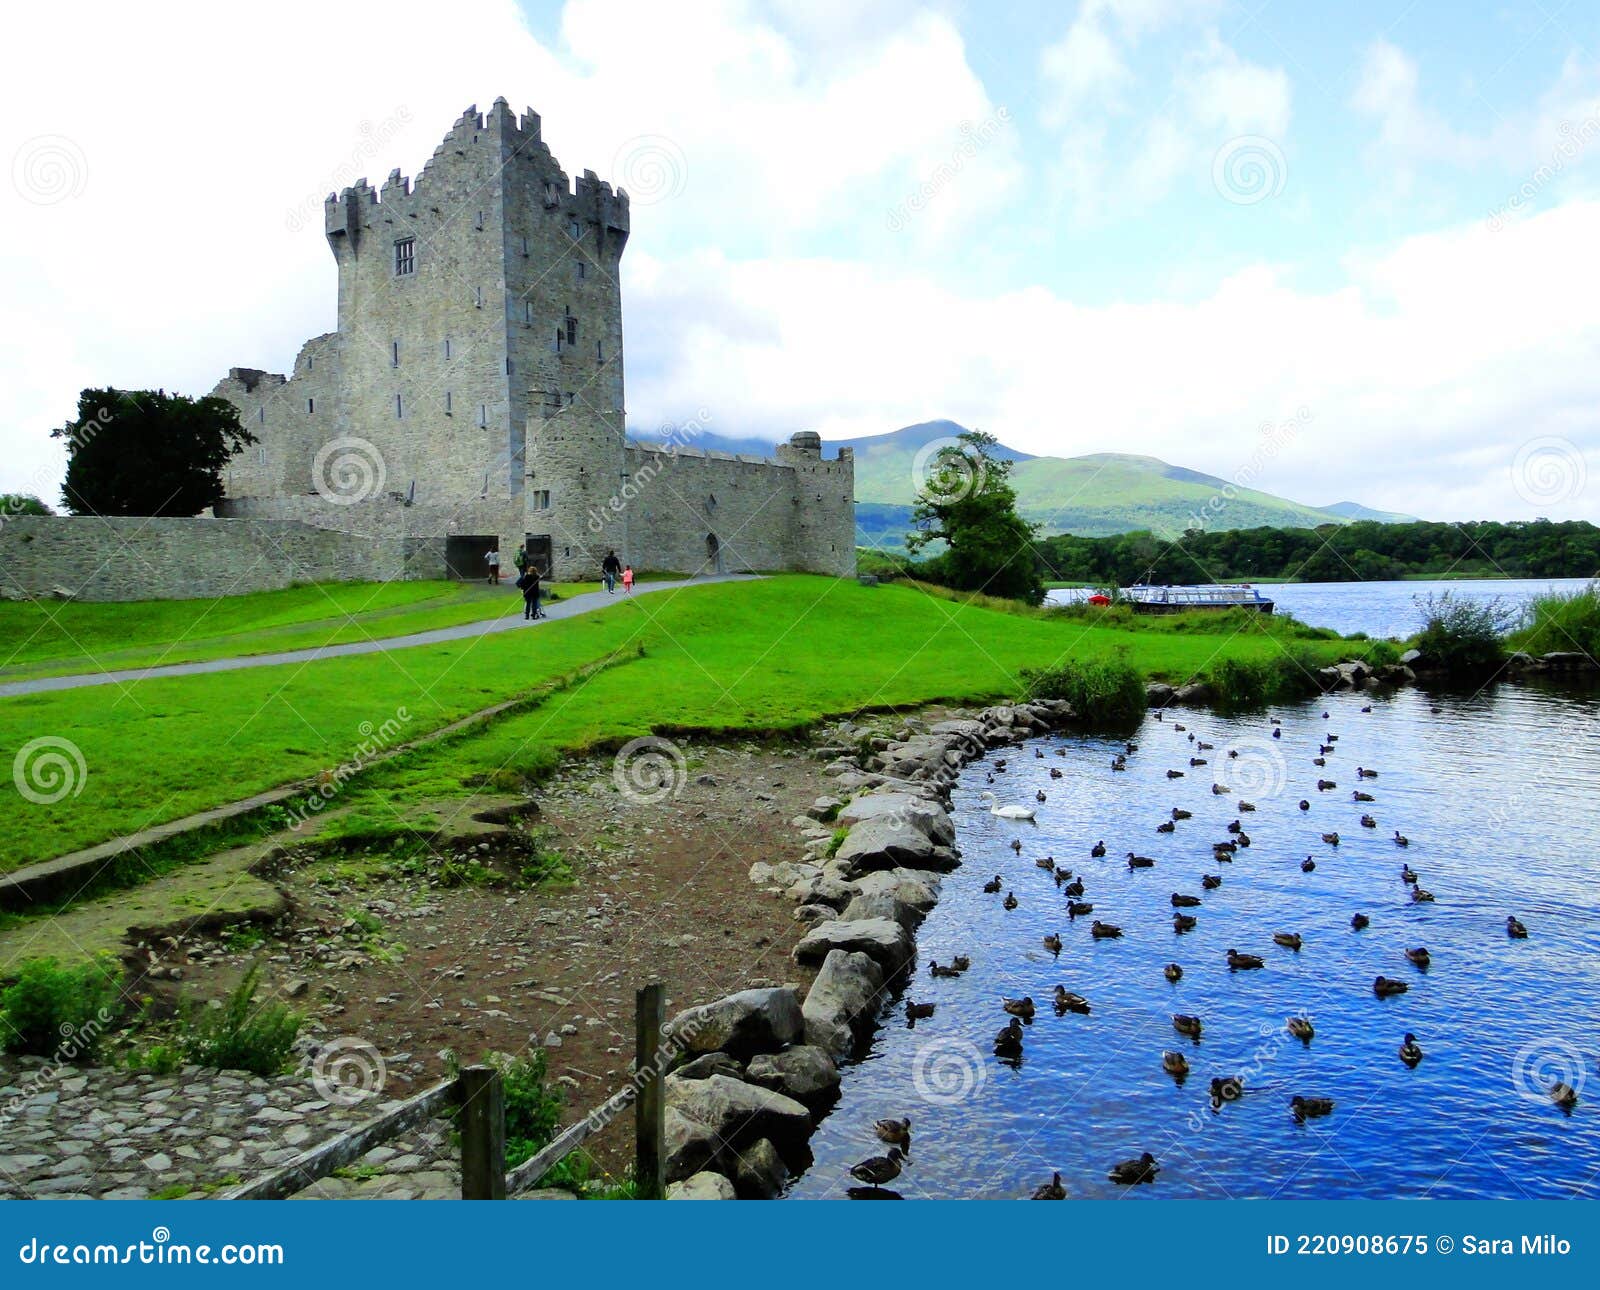 ireland ross castle kerry killarney- castello di ross irlanda